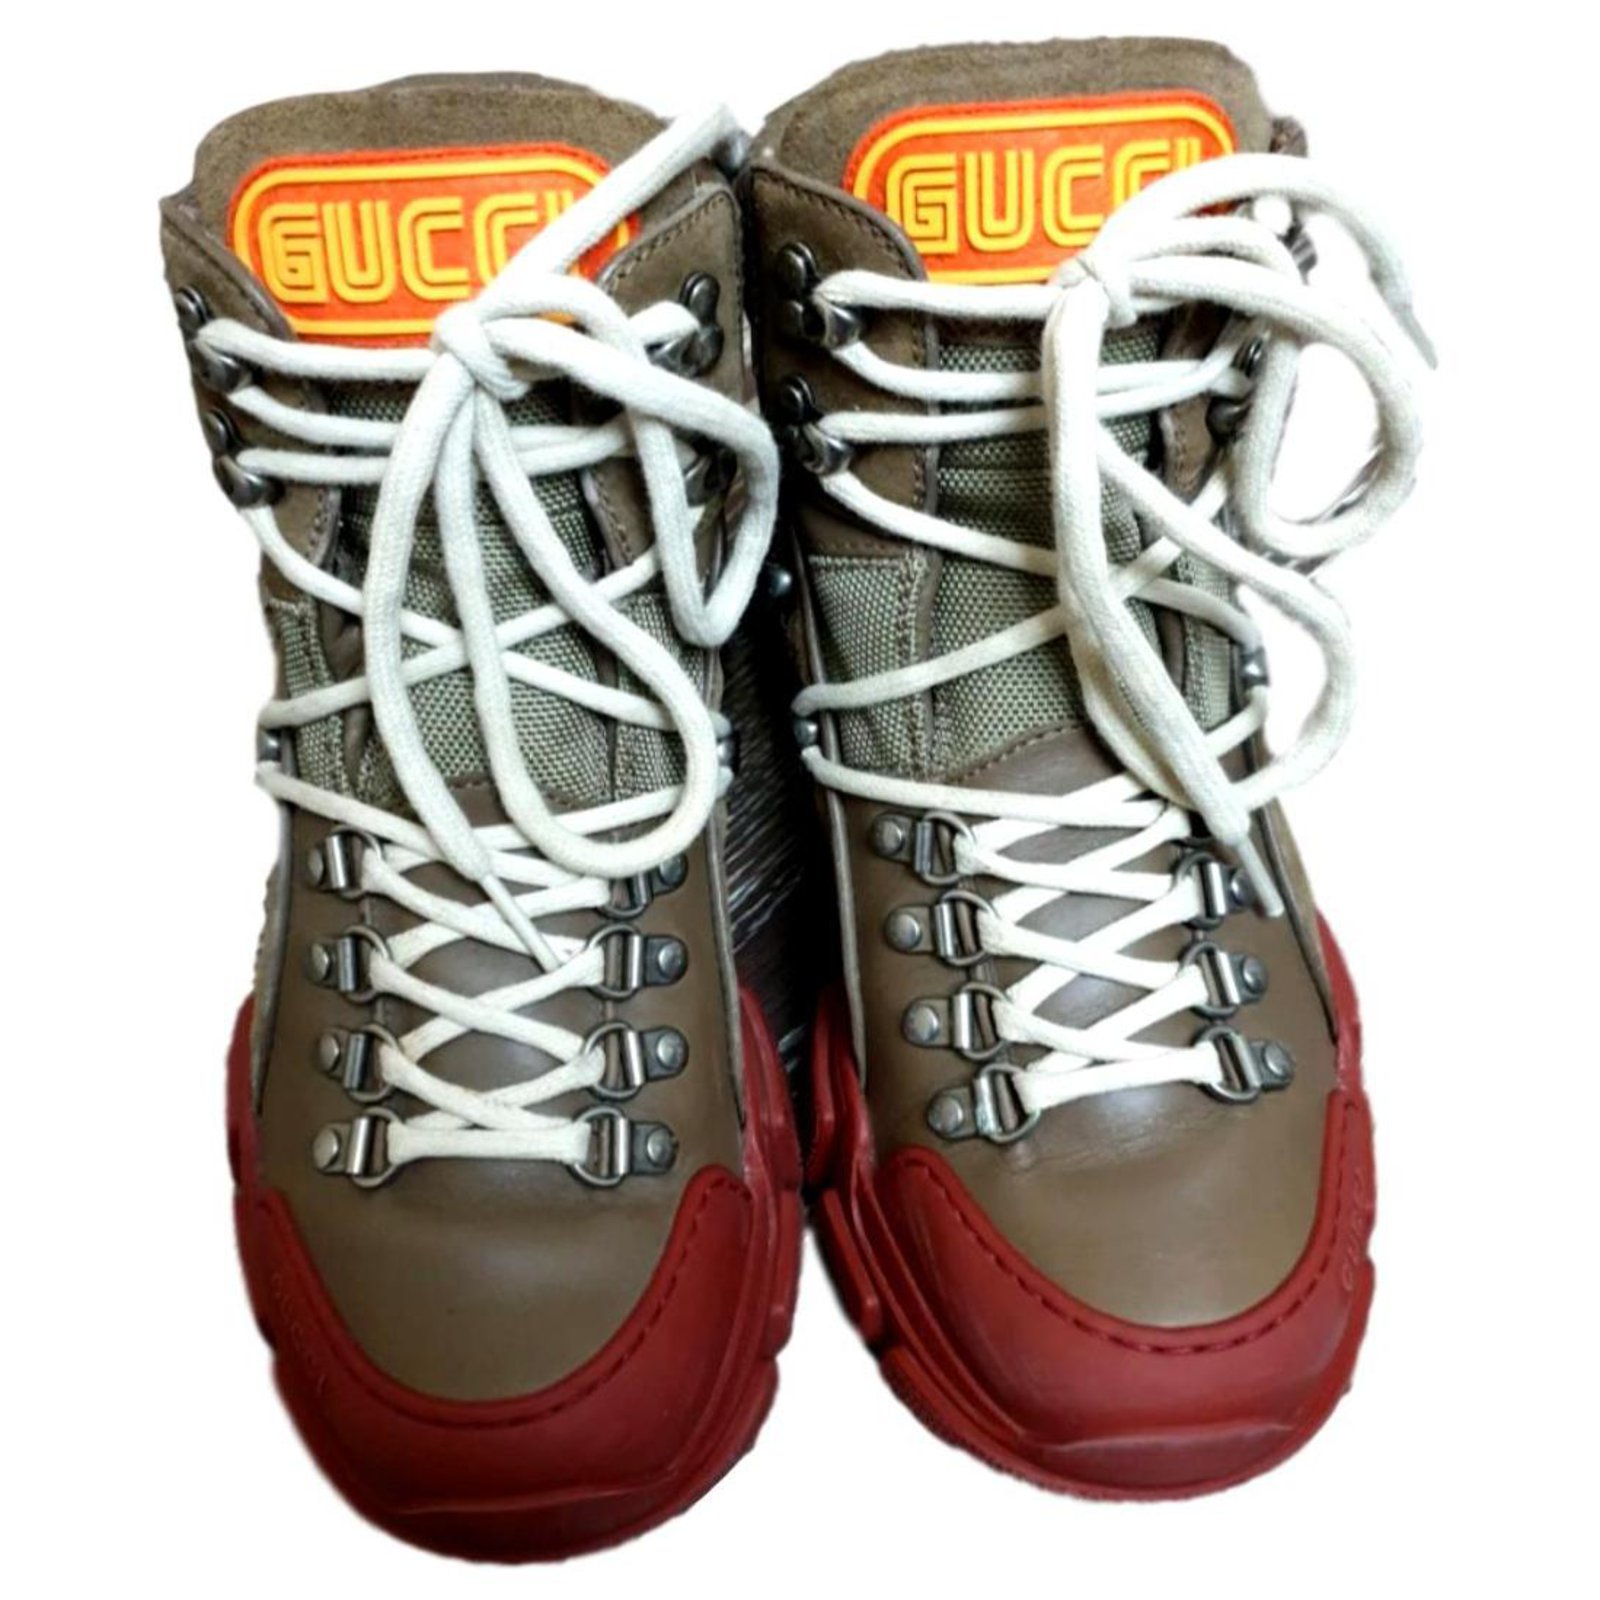 gucci flashtrek boots